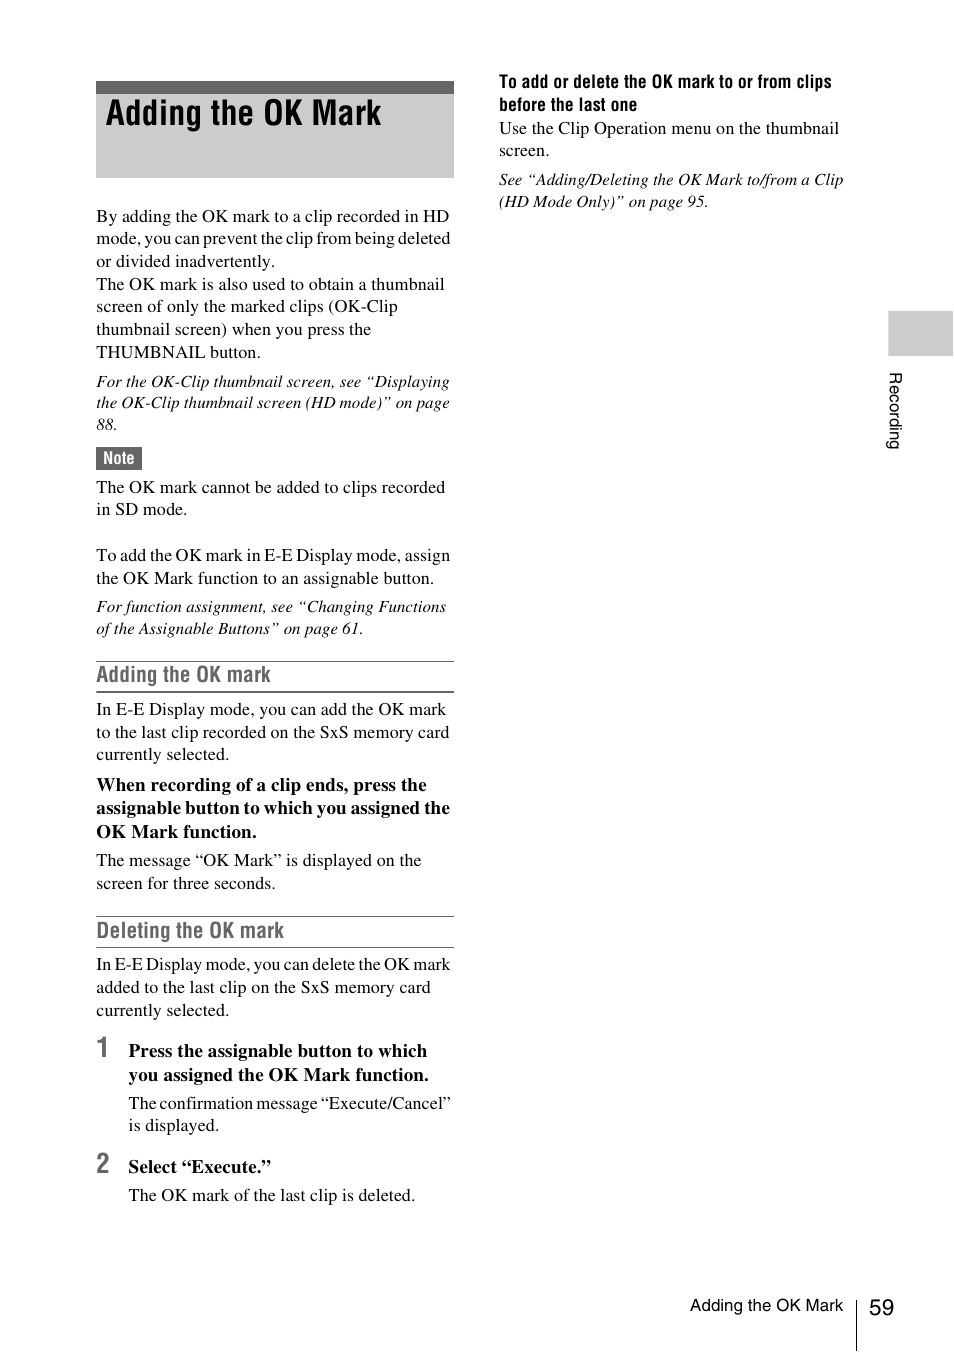 Adding the ok mark | Sony PMW-F3K User Manual | Page 59 / 164